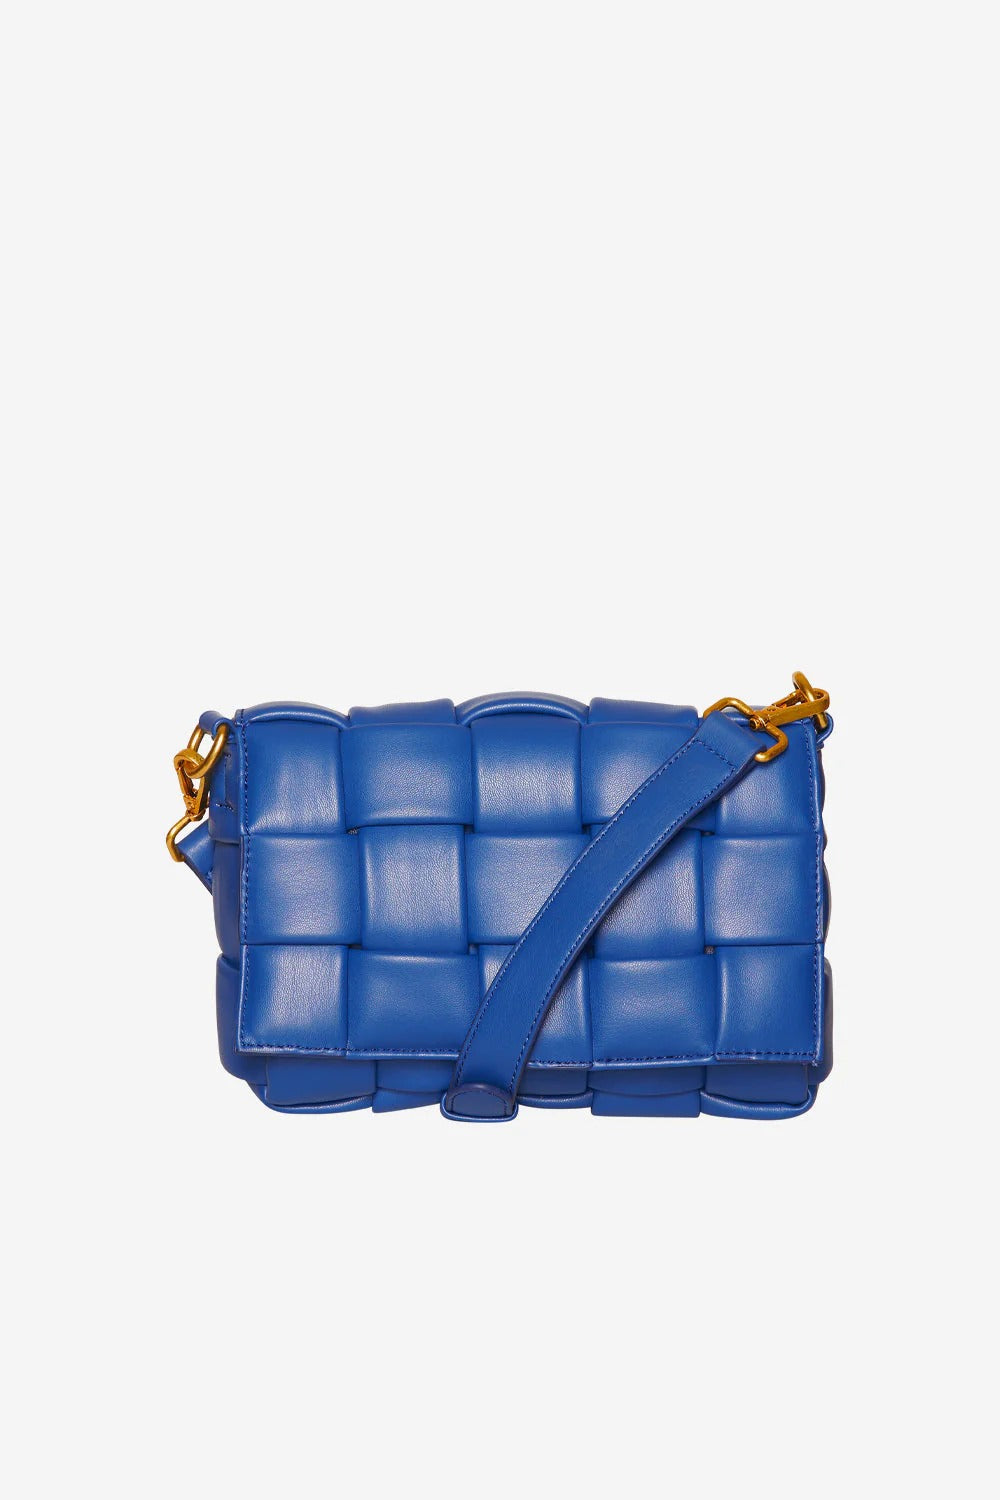 Brick bag royal blue